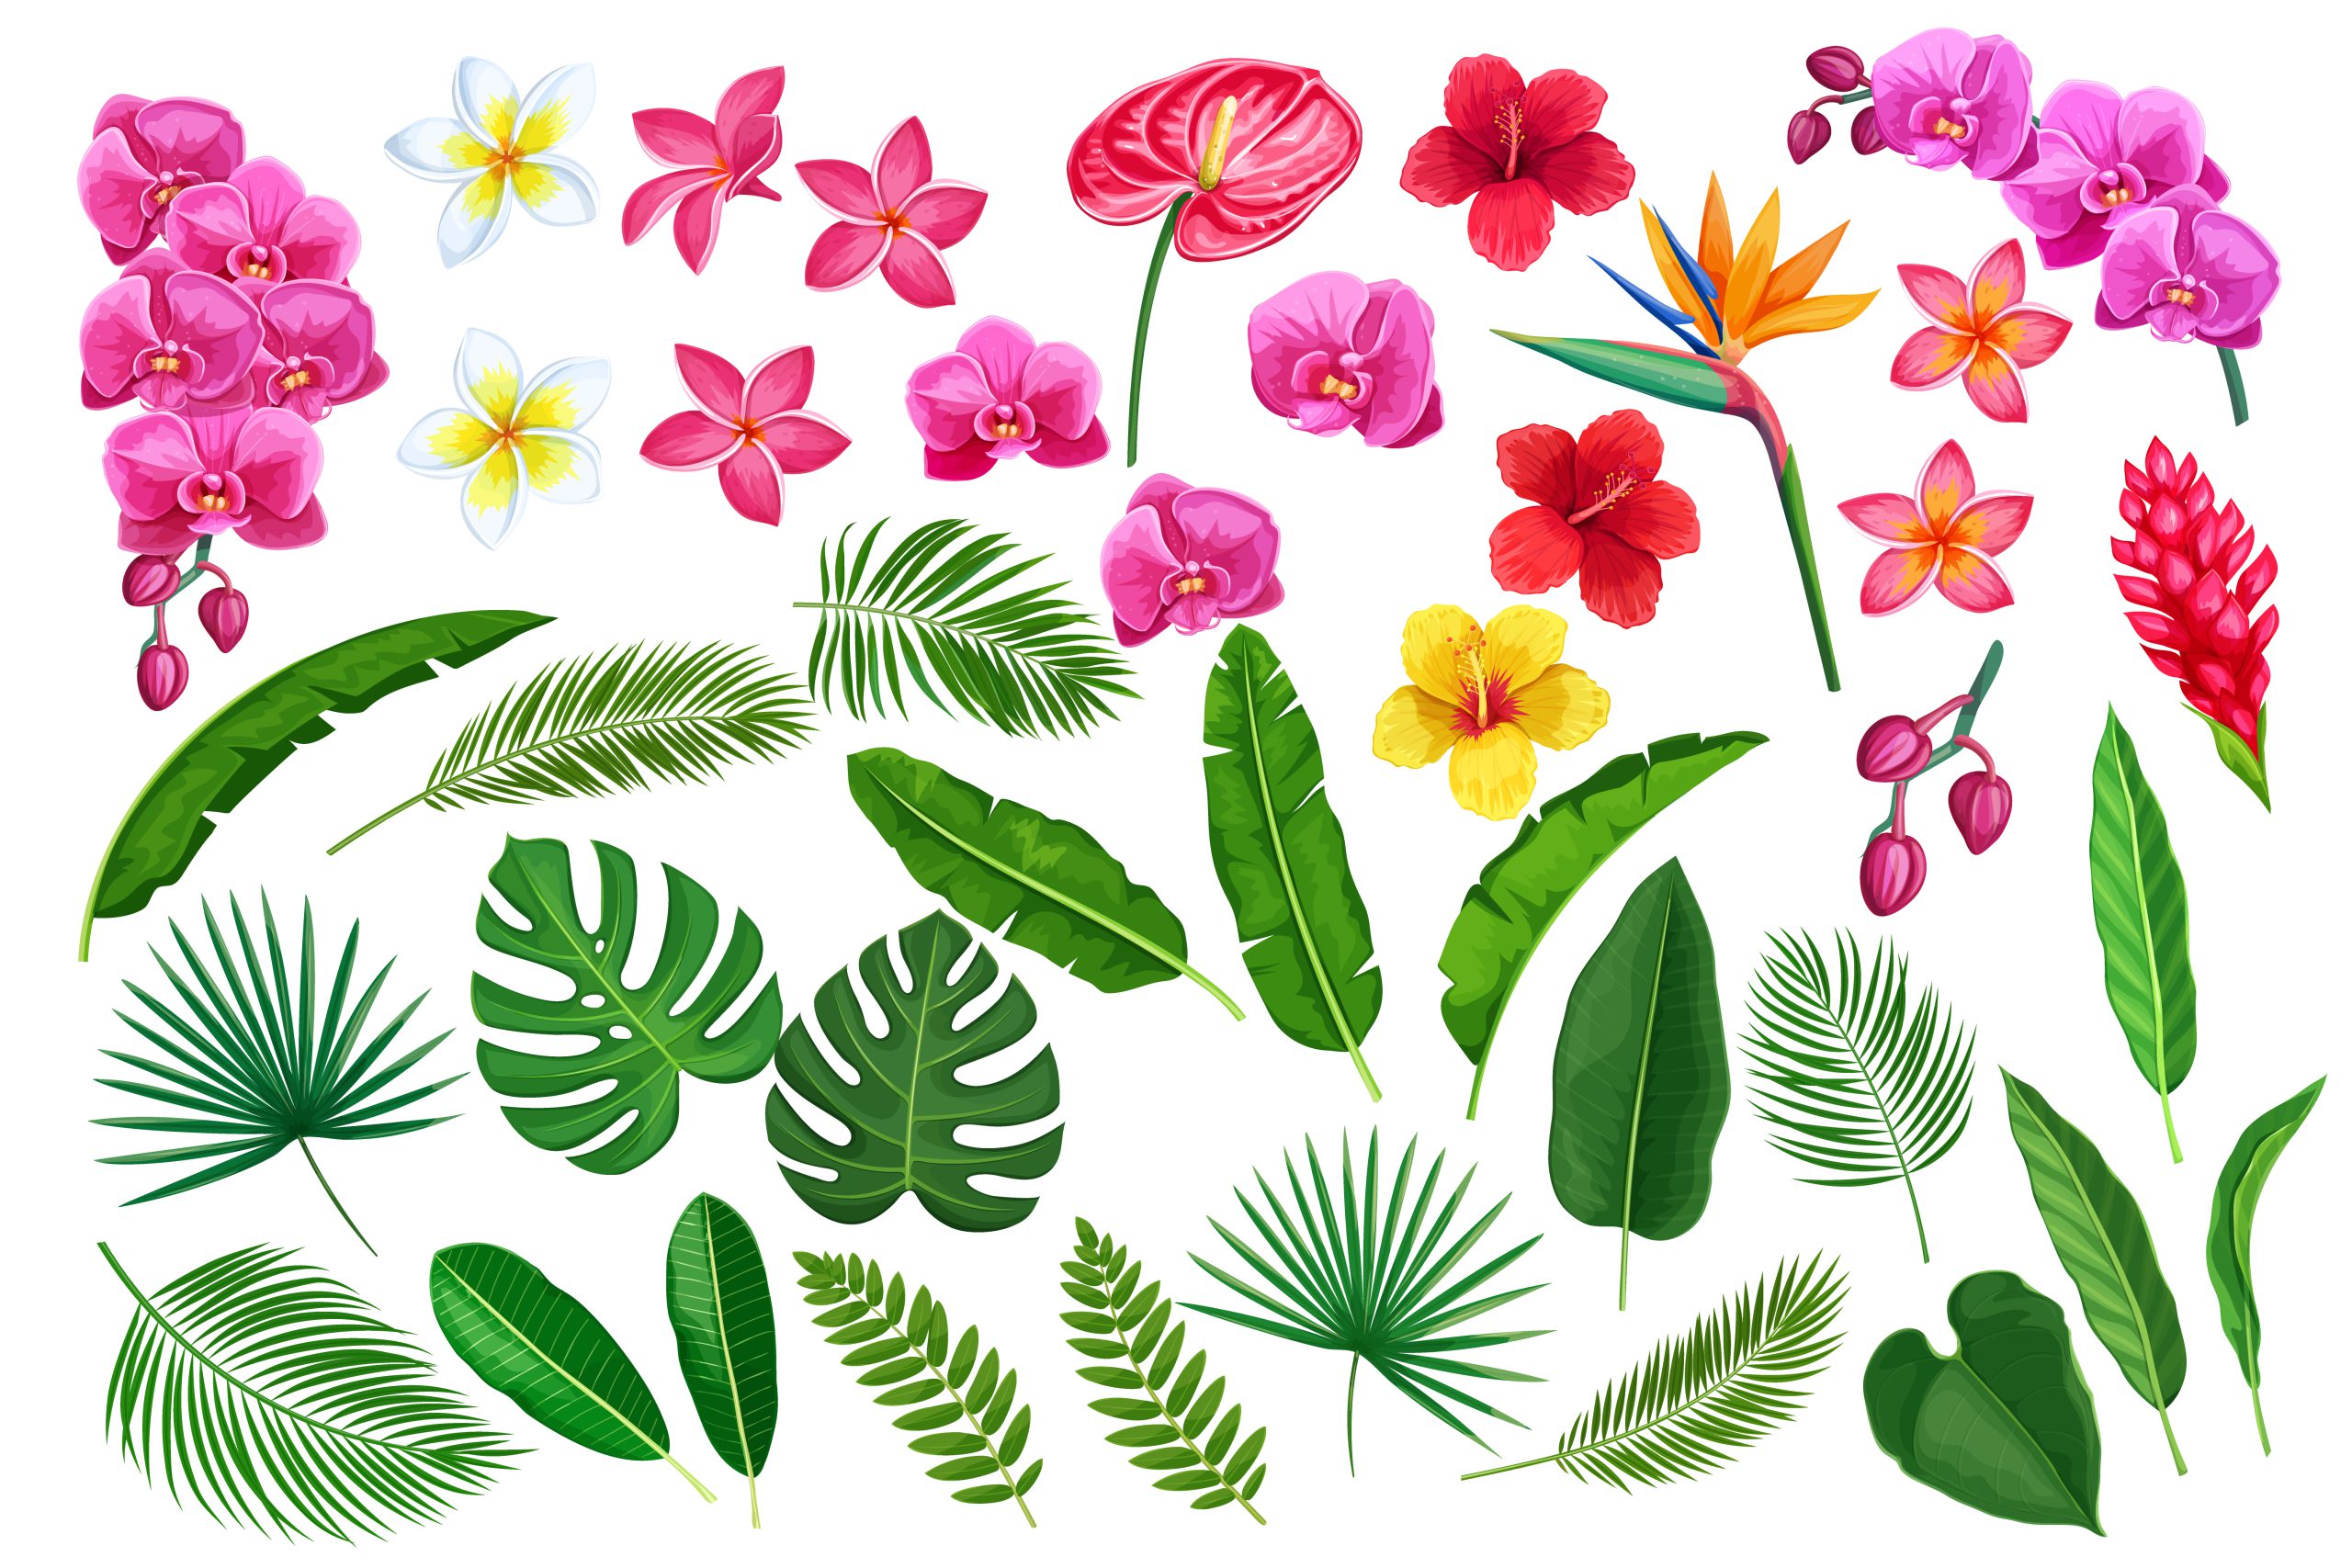 مجموعه 40 عددی براش فوتوشاپ طرح گل